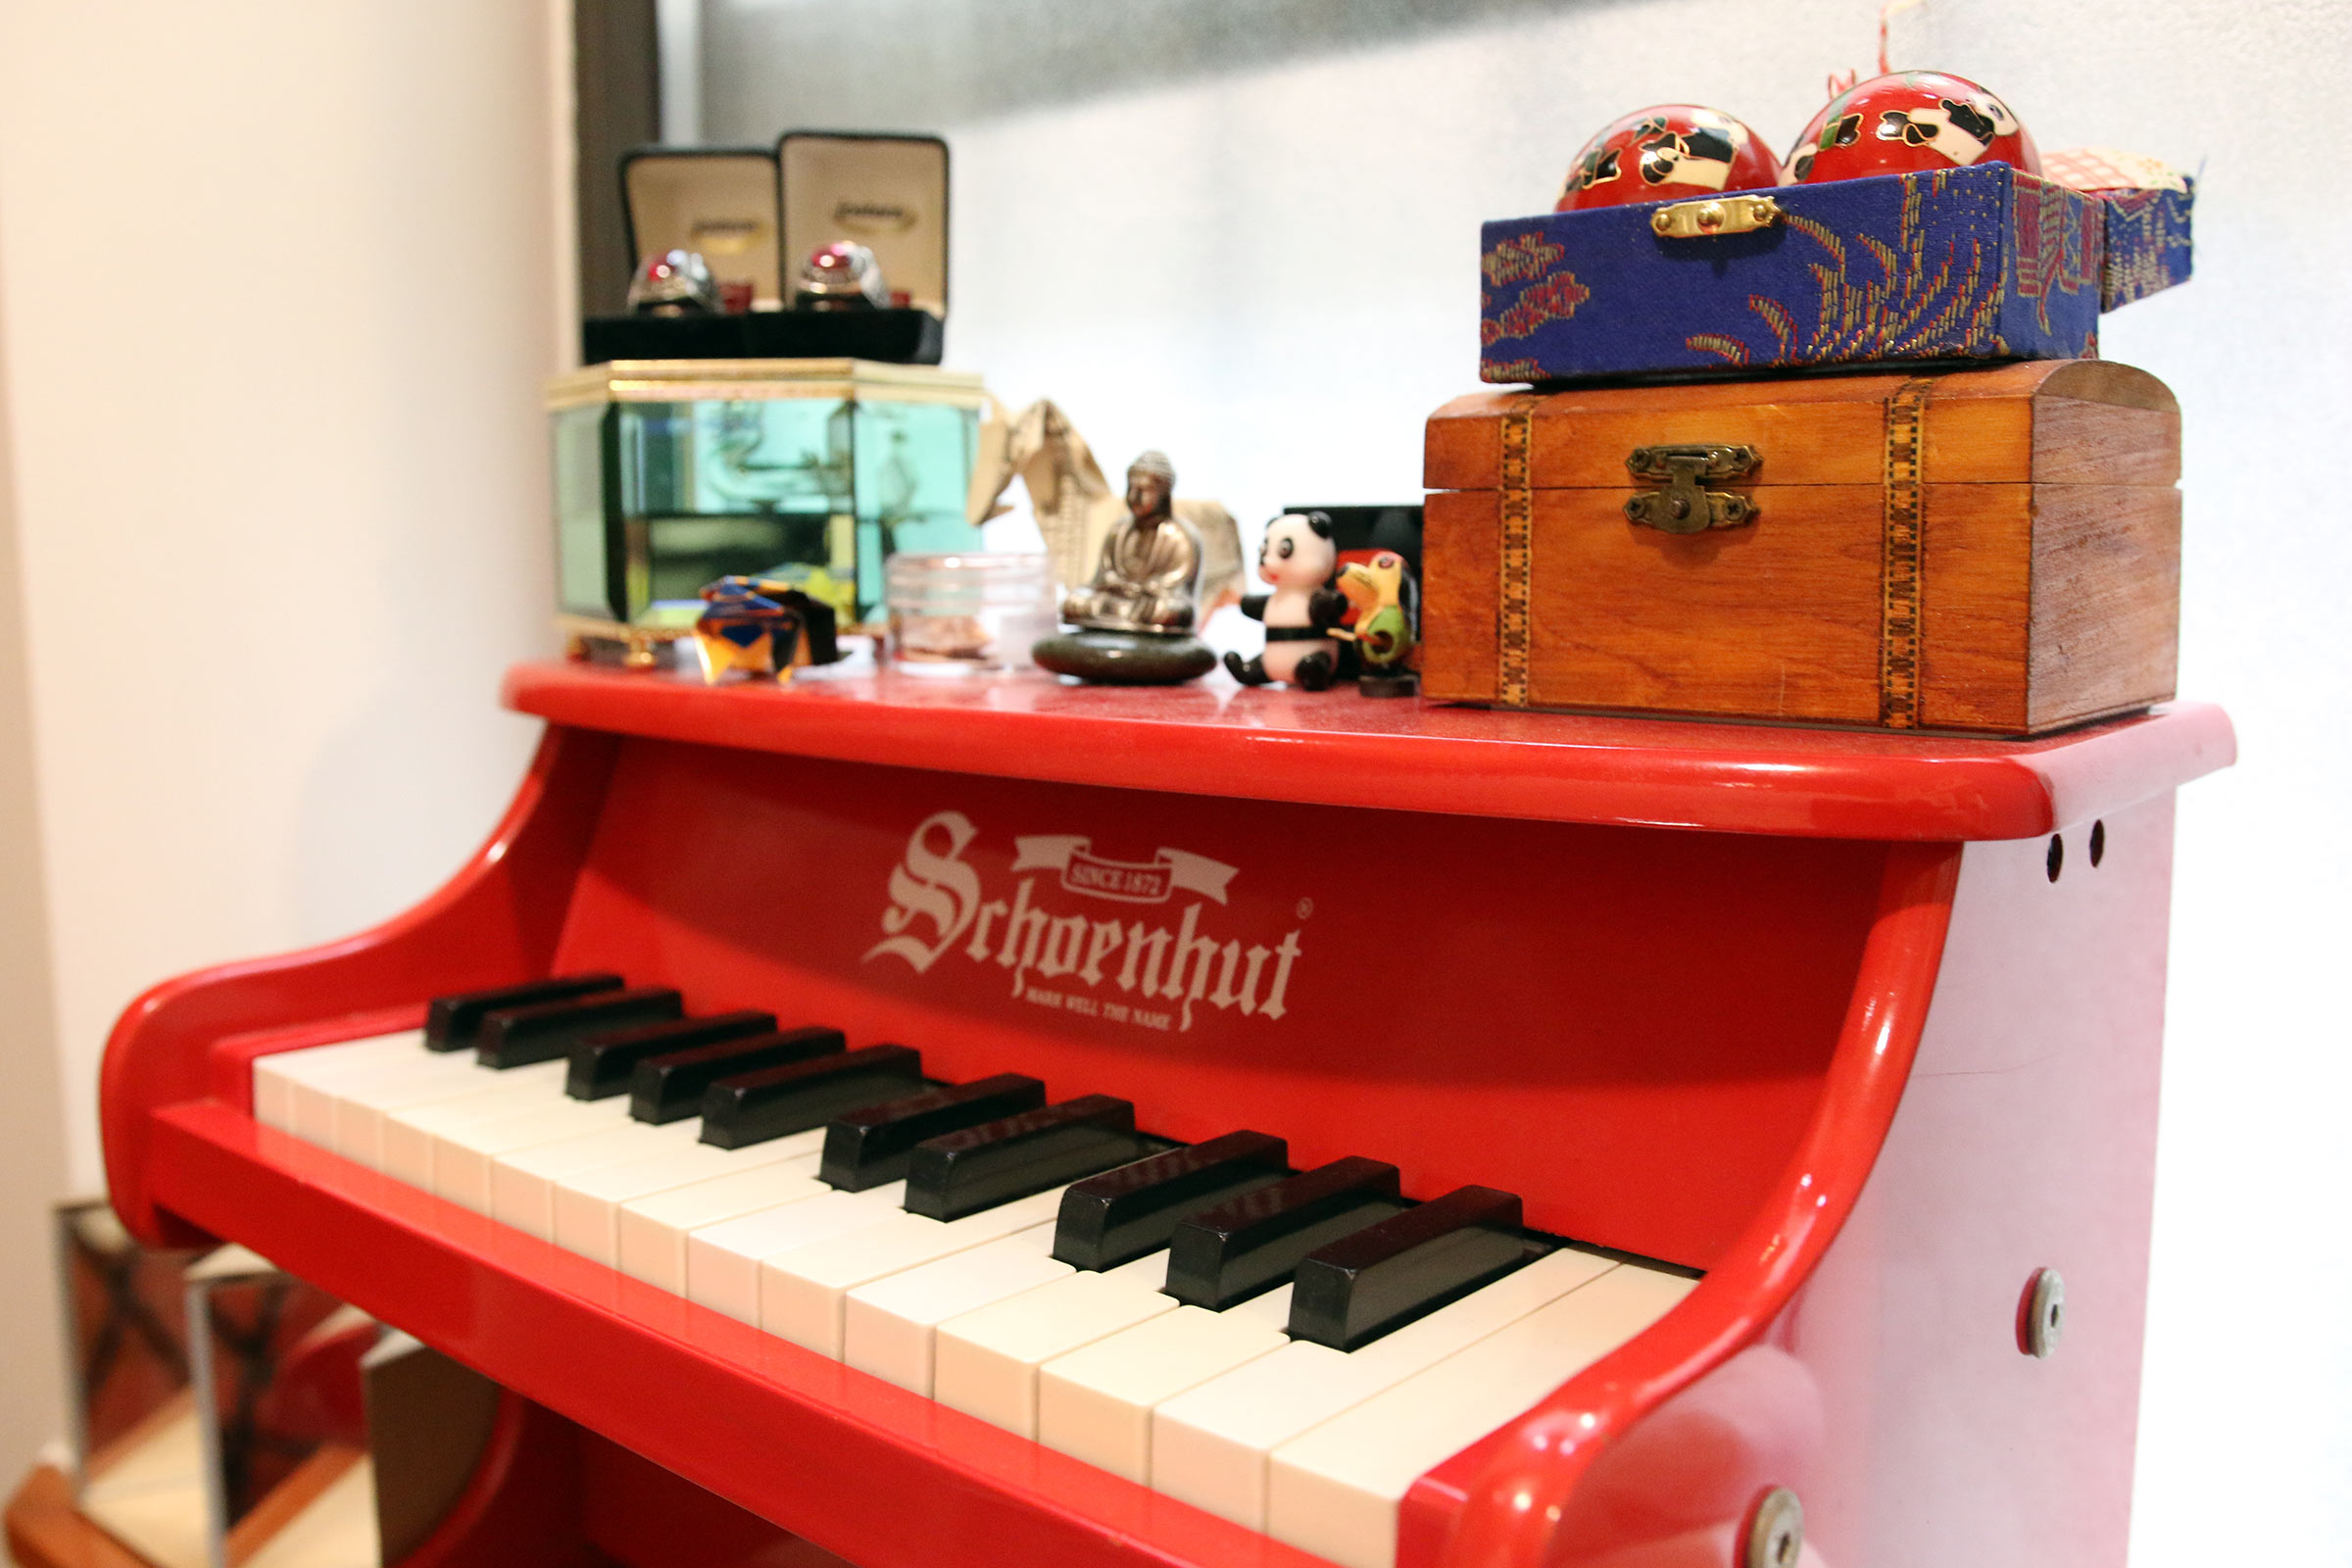 Andy Akiho's Schoenhut toy piano